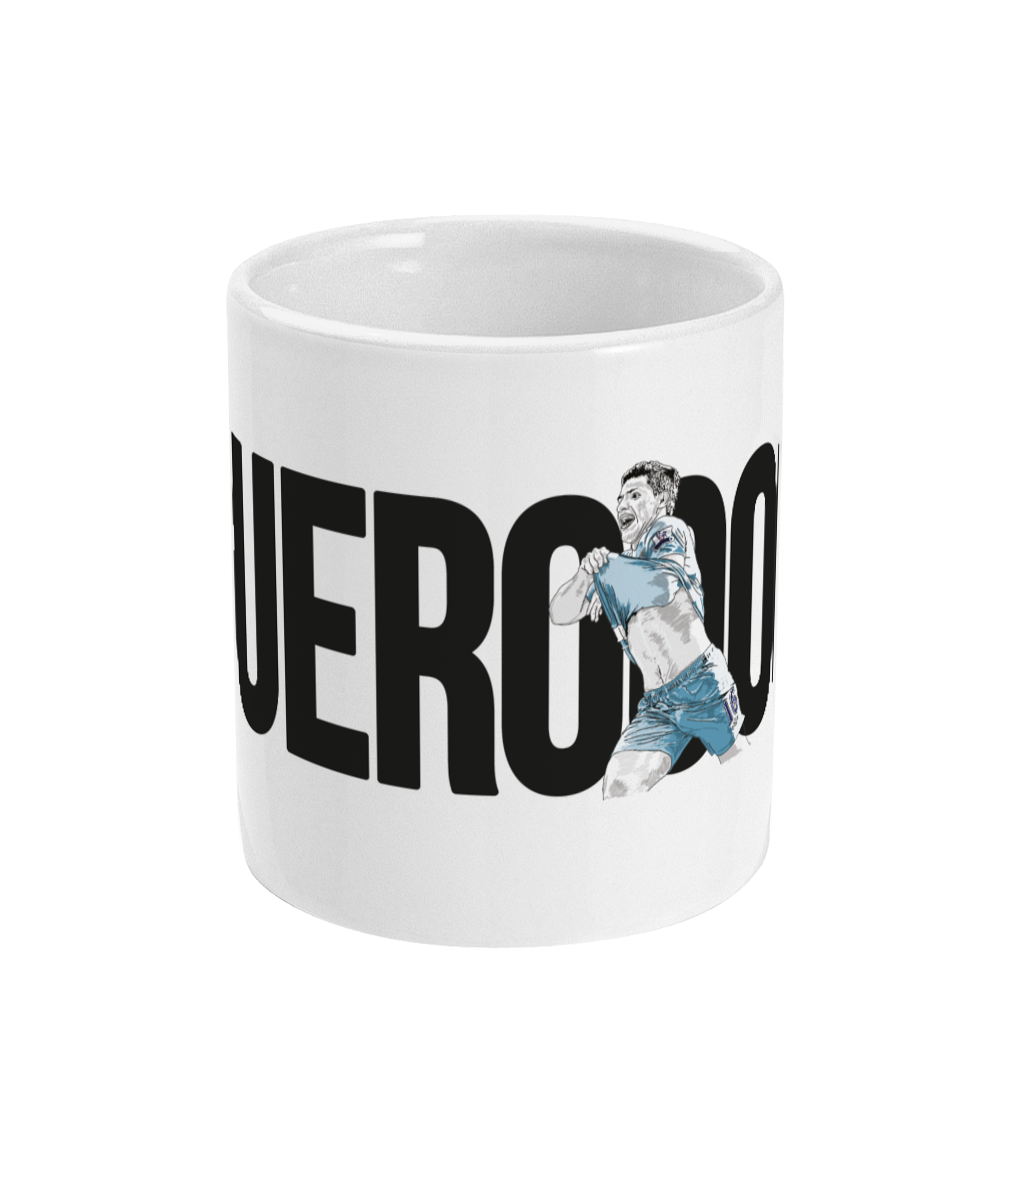 sergio aguerooo special goal in 2012 premier league title illustration blue moon merchandise coffee cup tea mug